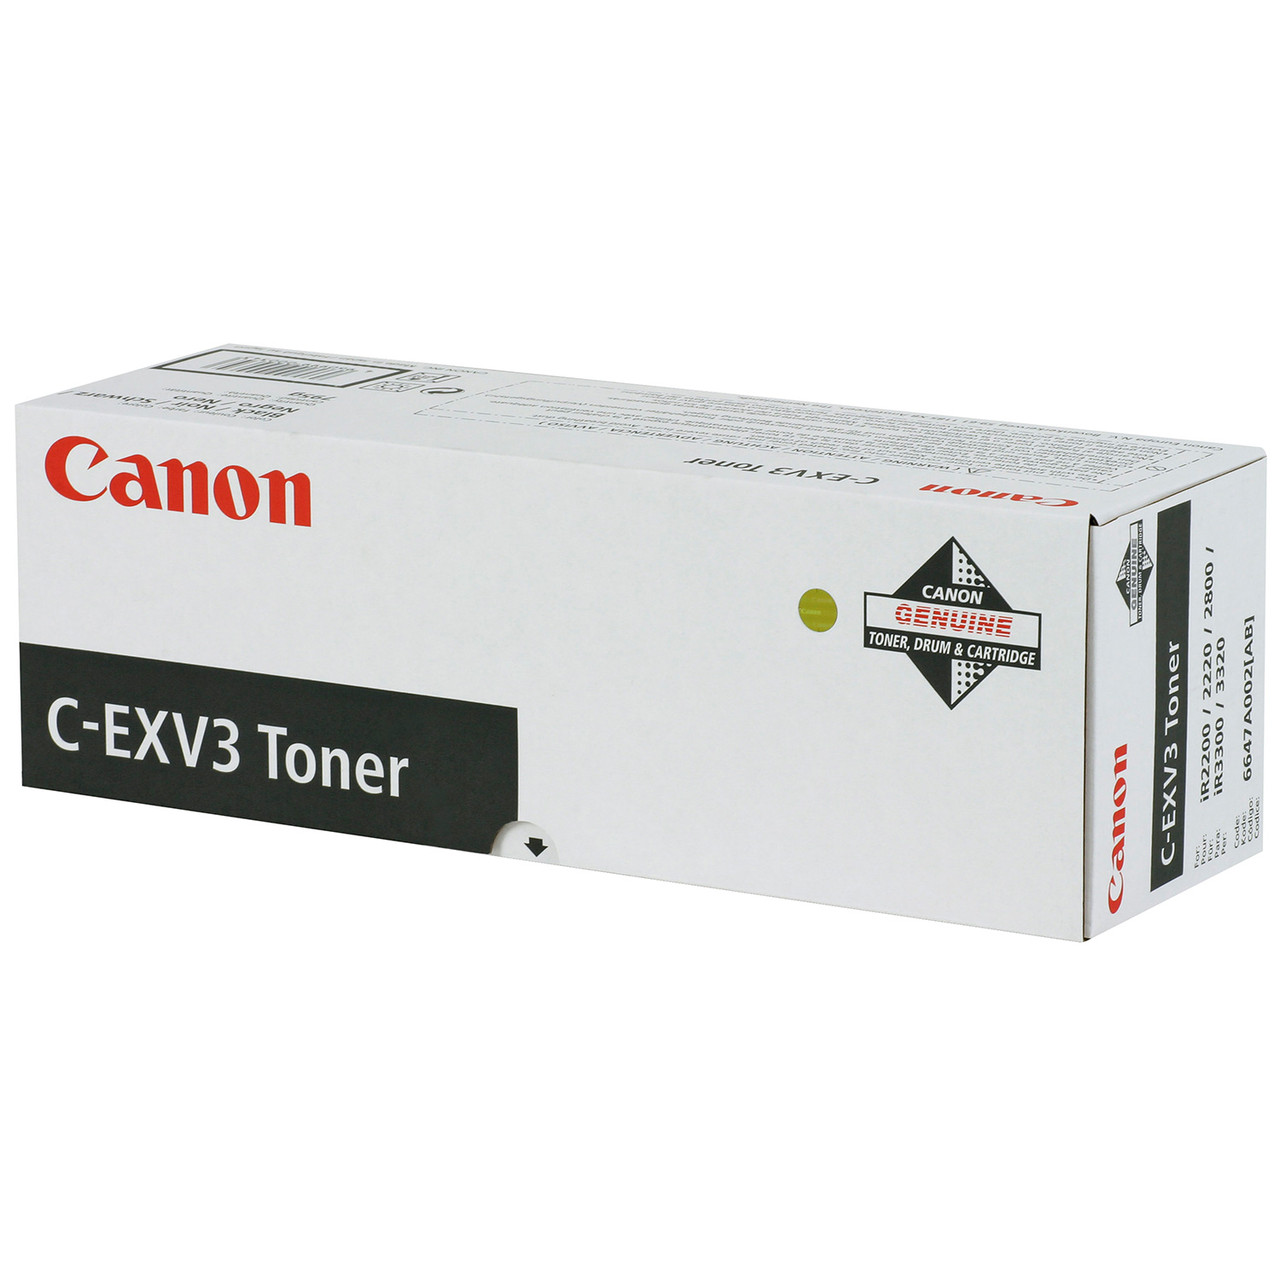 Тонер Canon C-EXV3 для iR2200/ 2800/3300